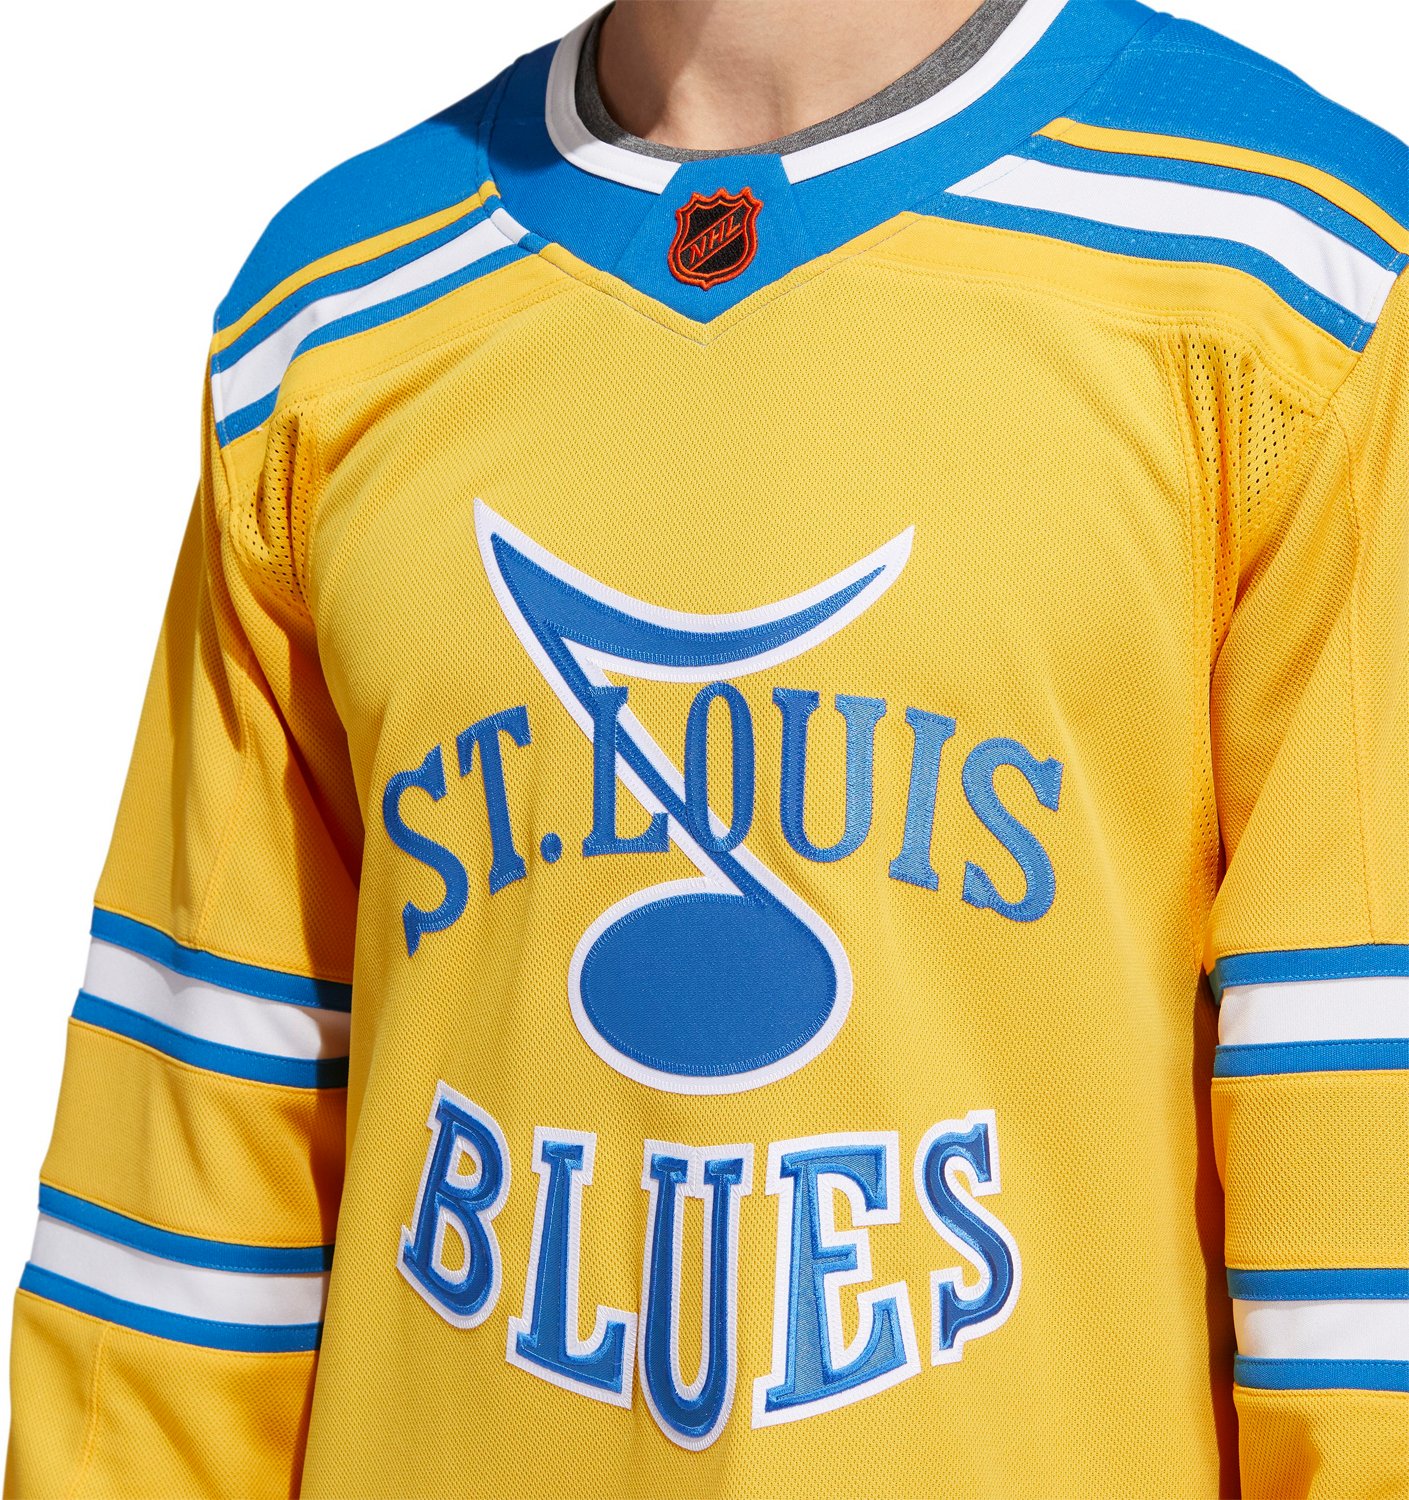 St. Louis Blues Reverse Retro Jersey! 